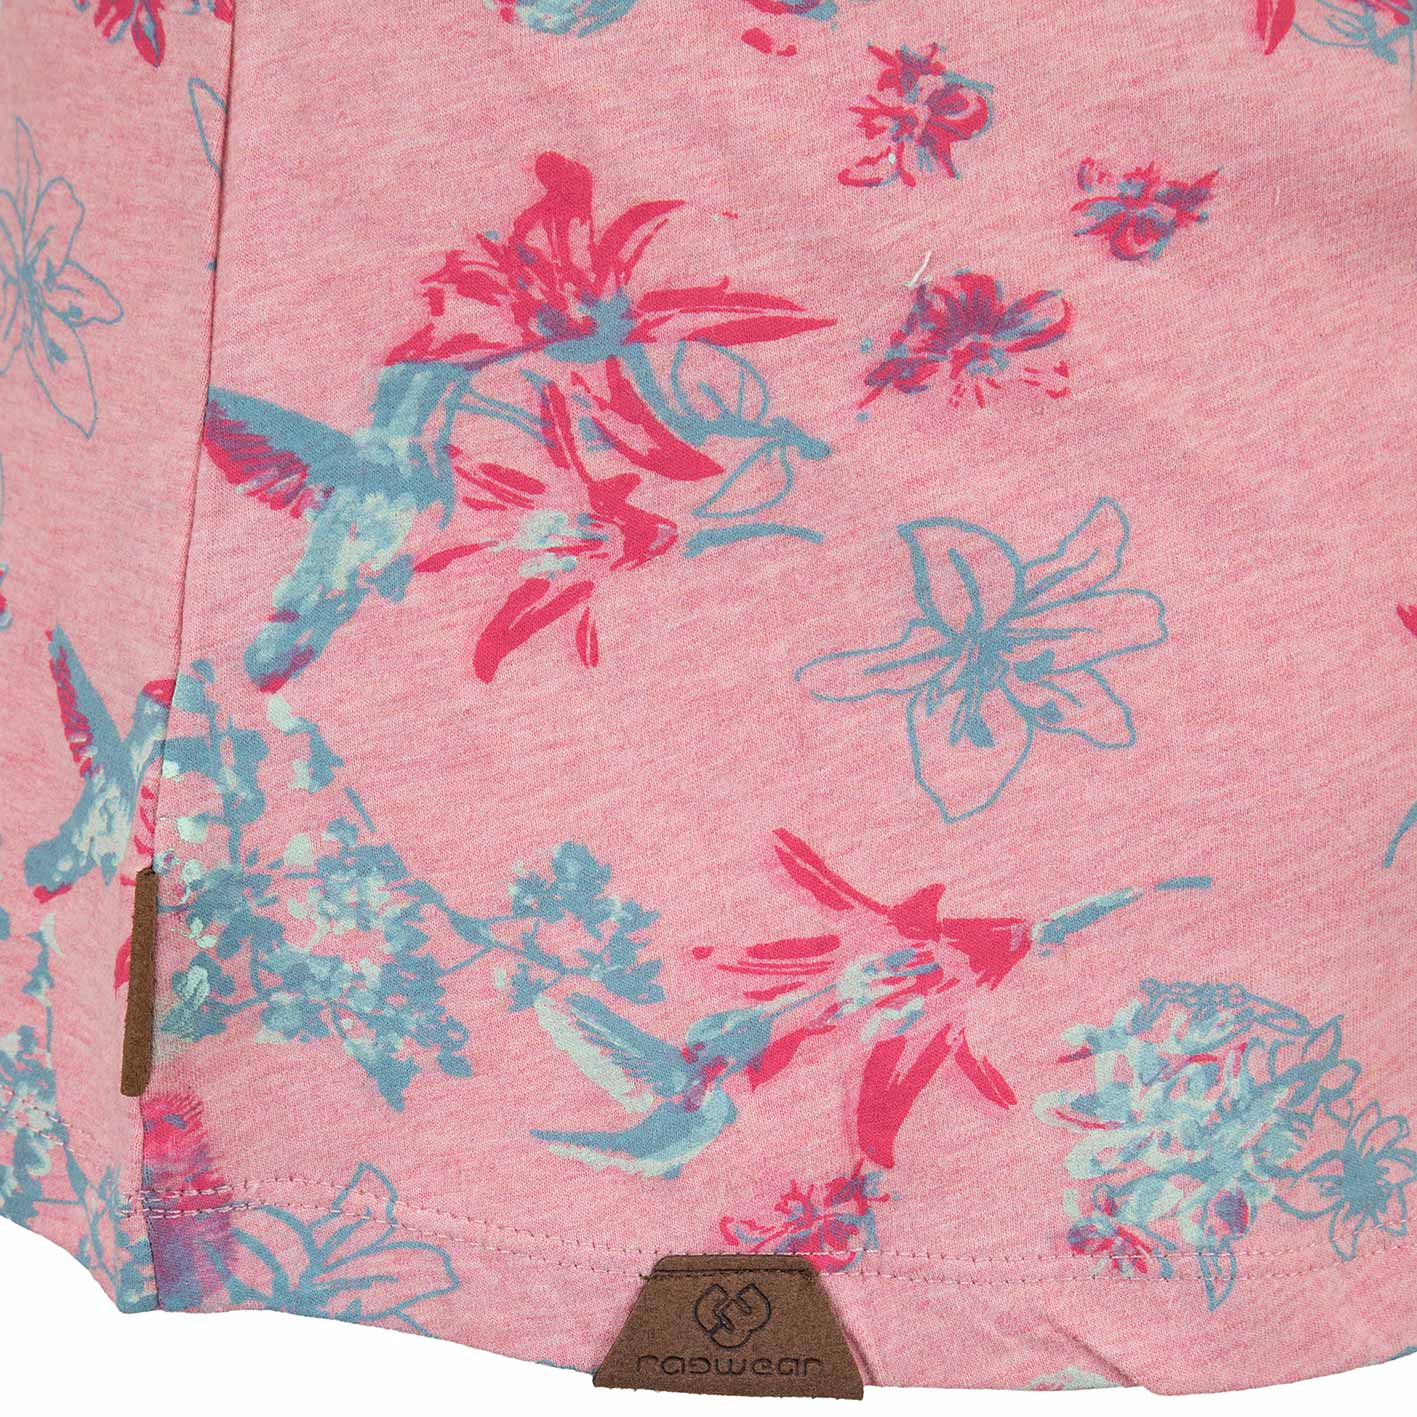 ☆ Ragwear Damen T-Shirt - Mint rosa Flowers hier bestellen